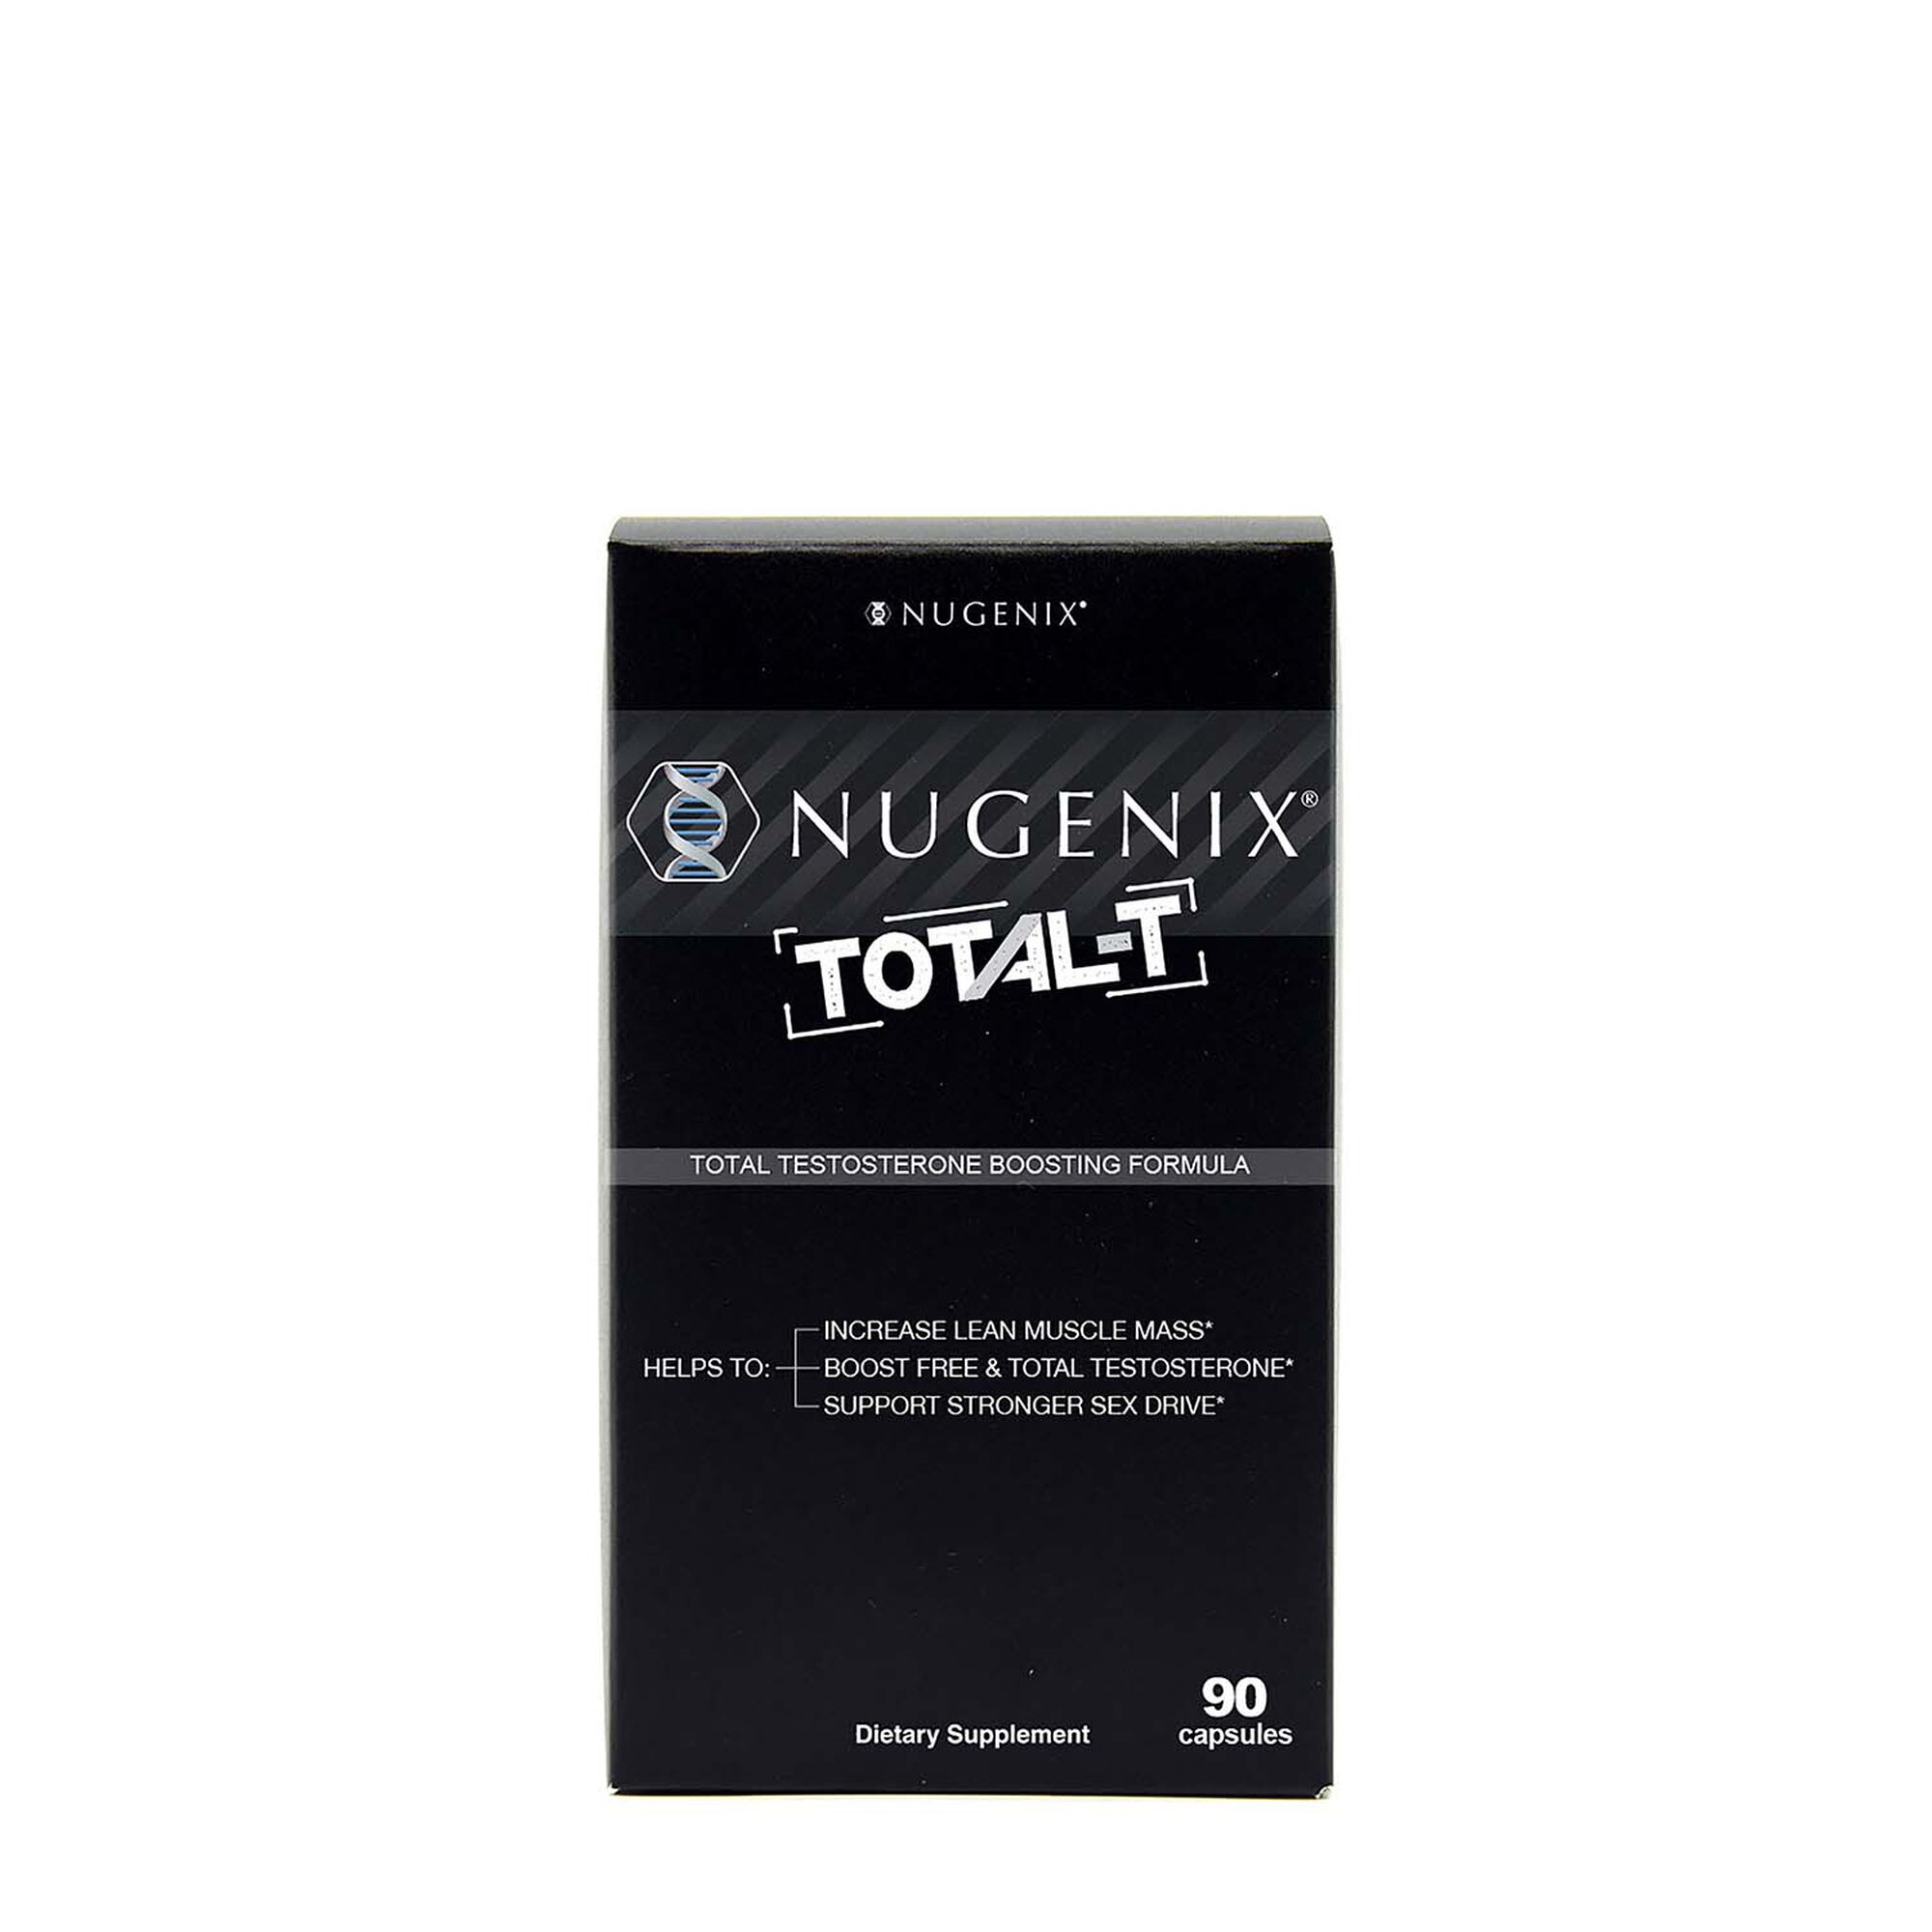 Nugenix Total T Testosterone Boosting Formula